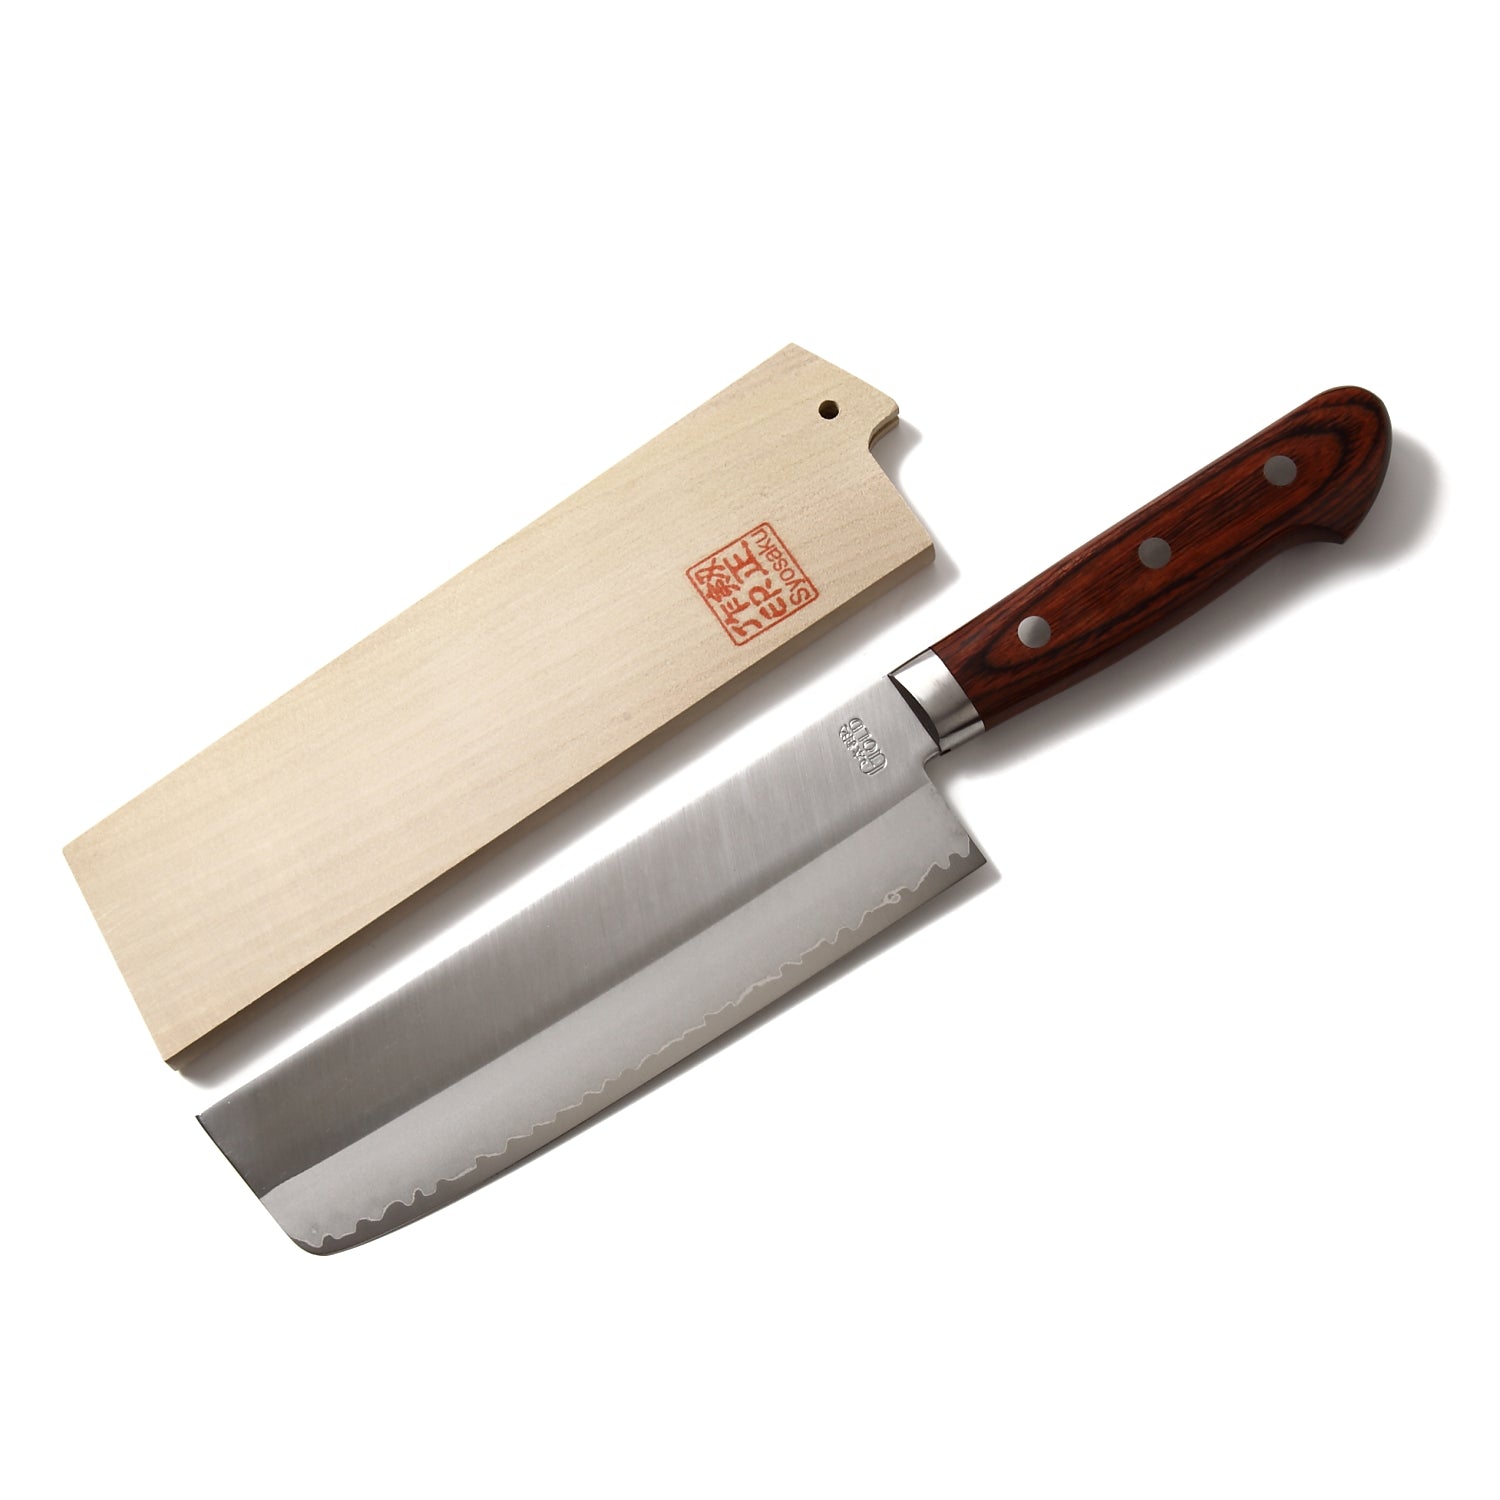 Syosaku Japanese Vegetable Knife VG-1 Gold Stainless Steel Mahogany Handle, Nakiri 6.3-inch (160mm) with Magnolia Wood Sheath Saya Cover